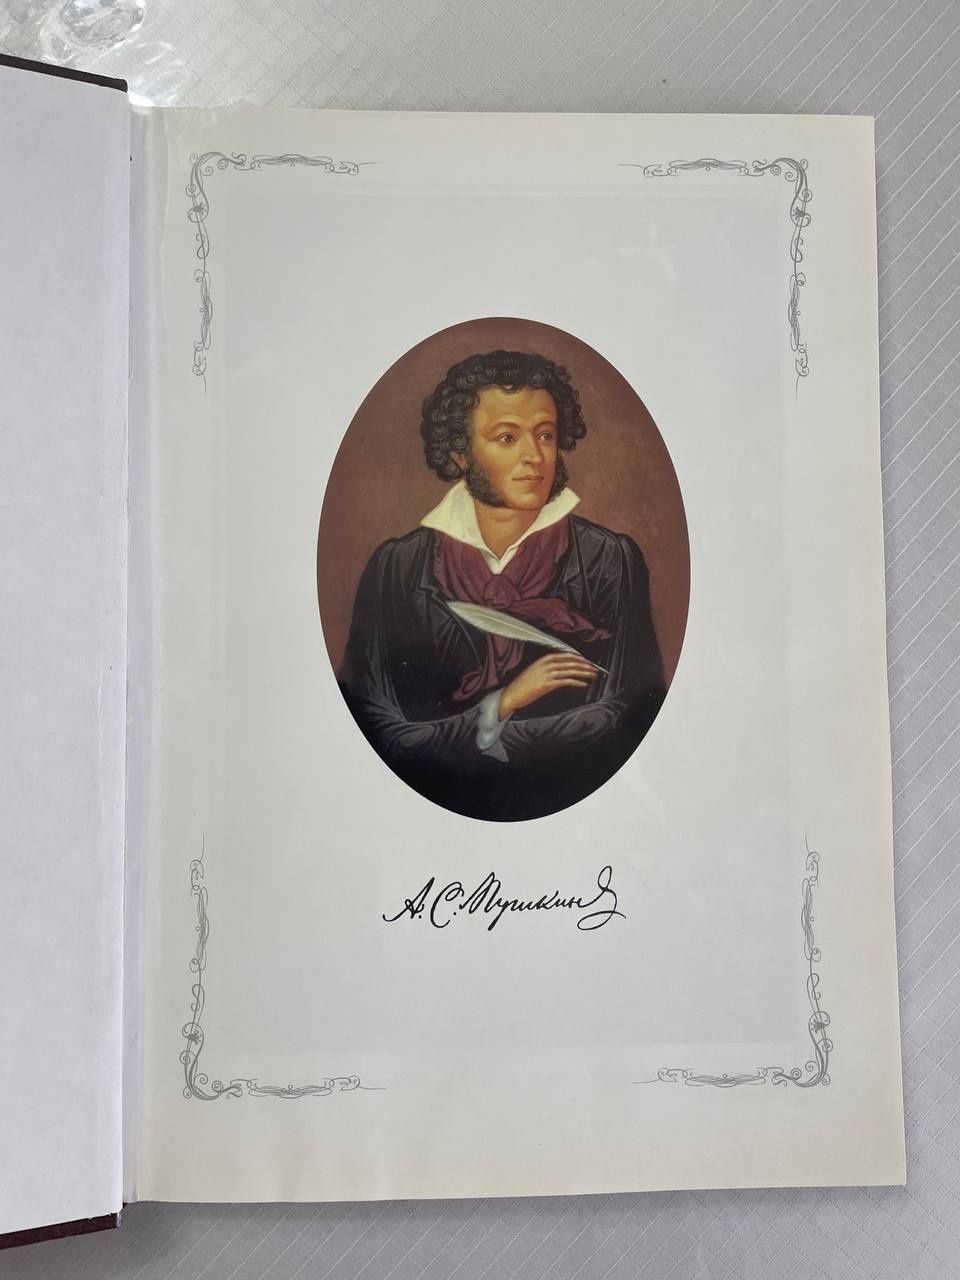 книжка Пушкина с 6 сказками и иллюстрациями